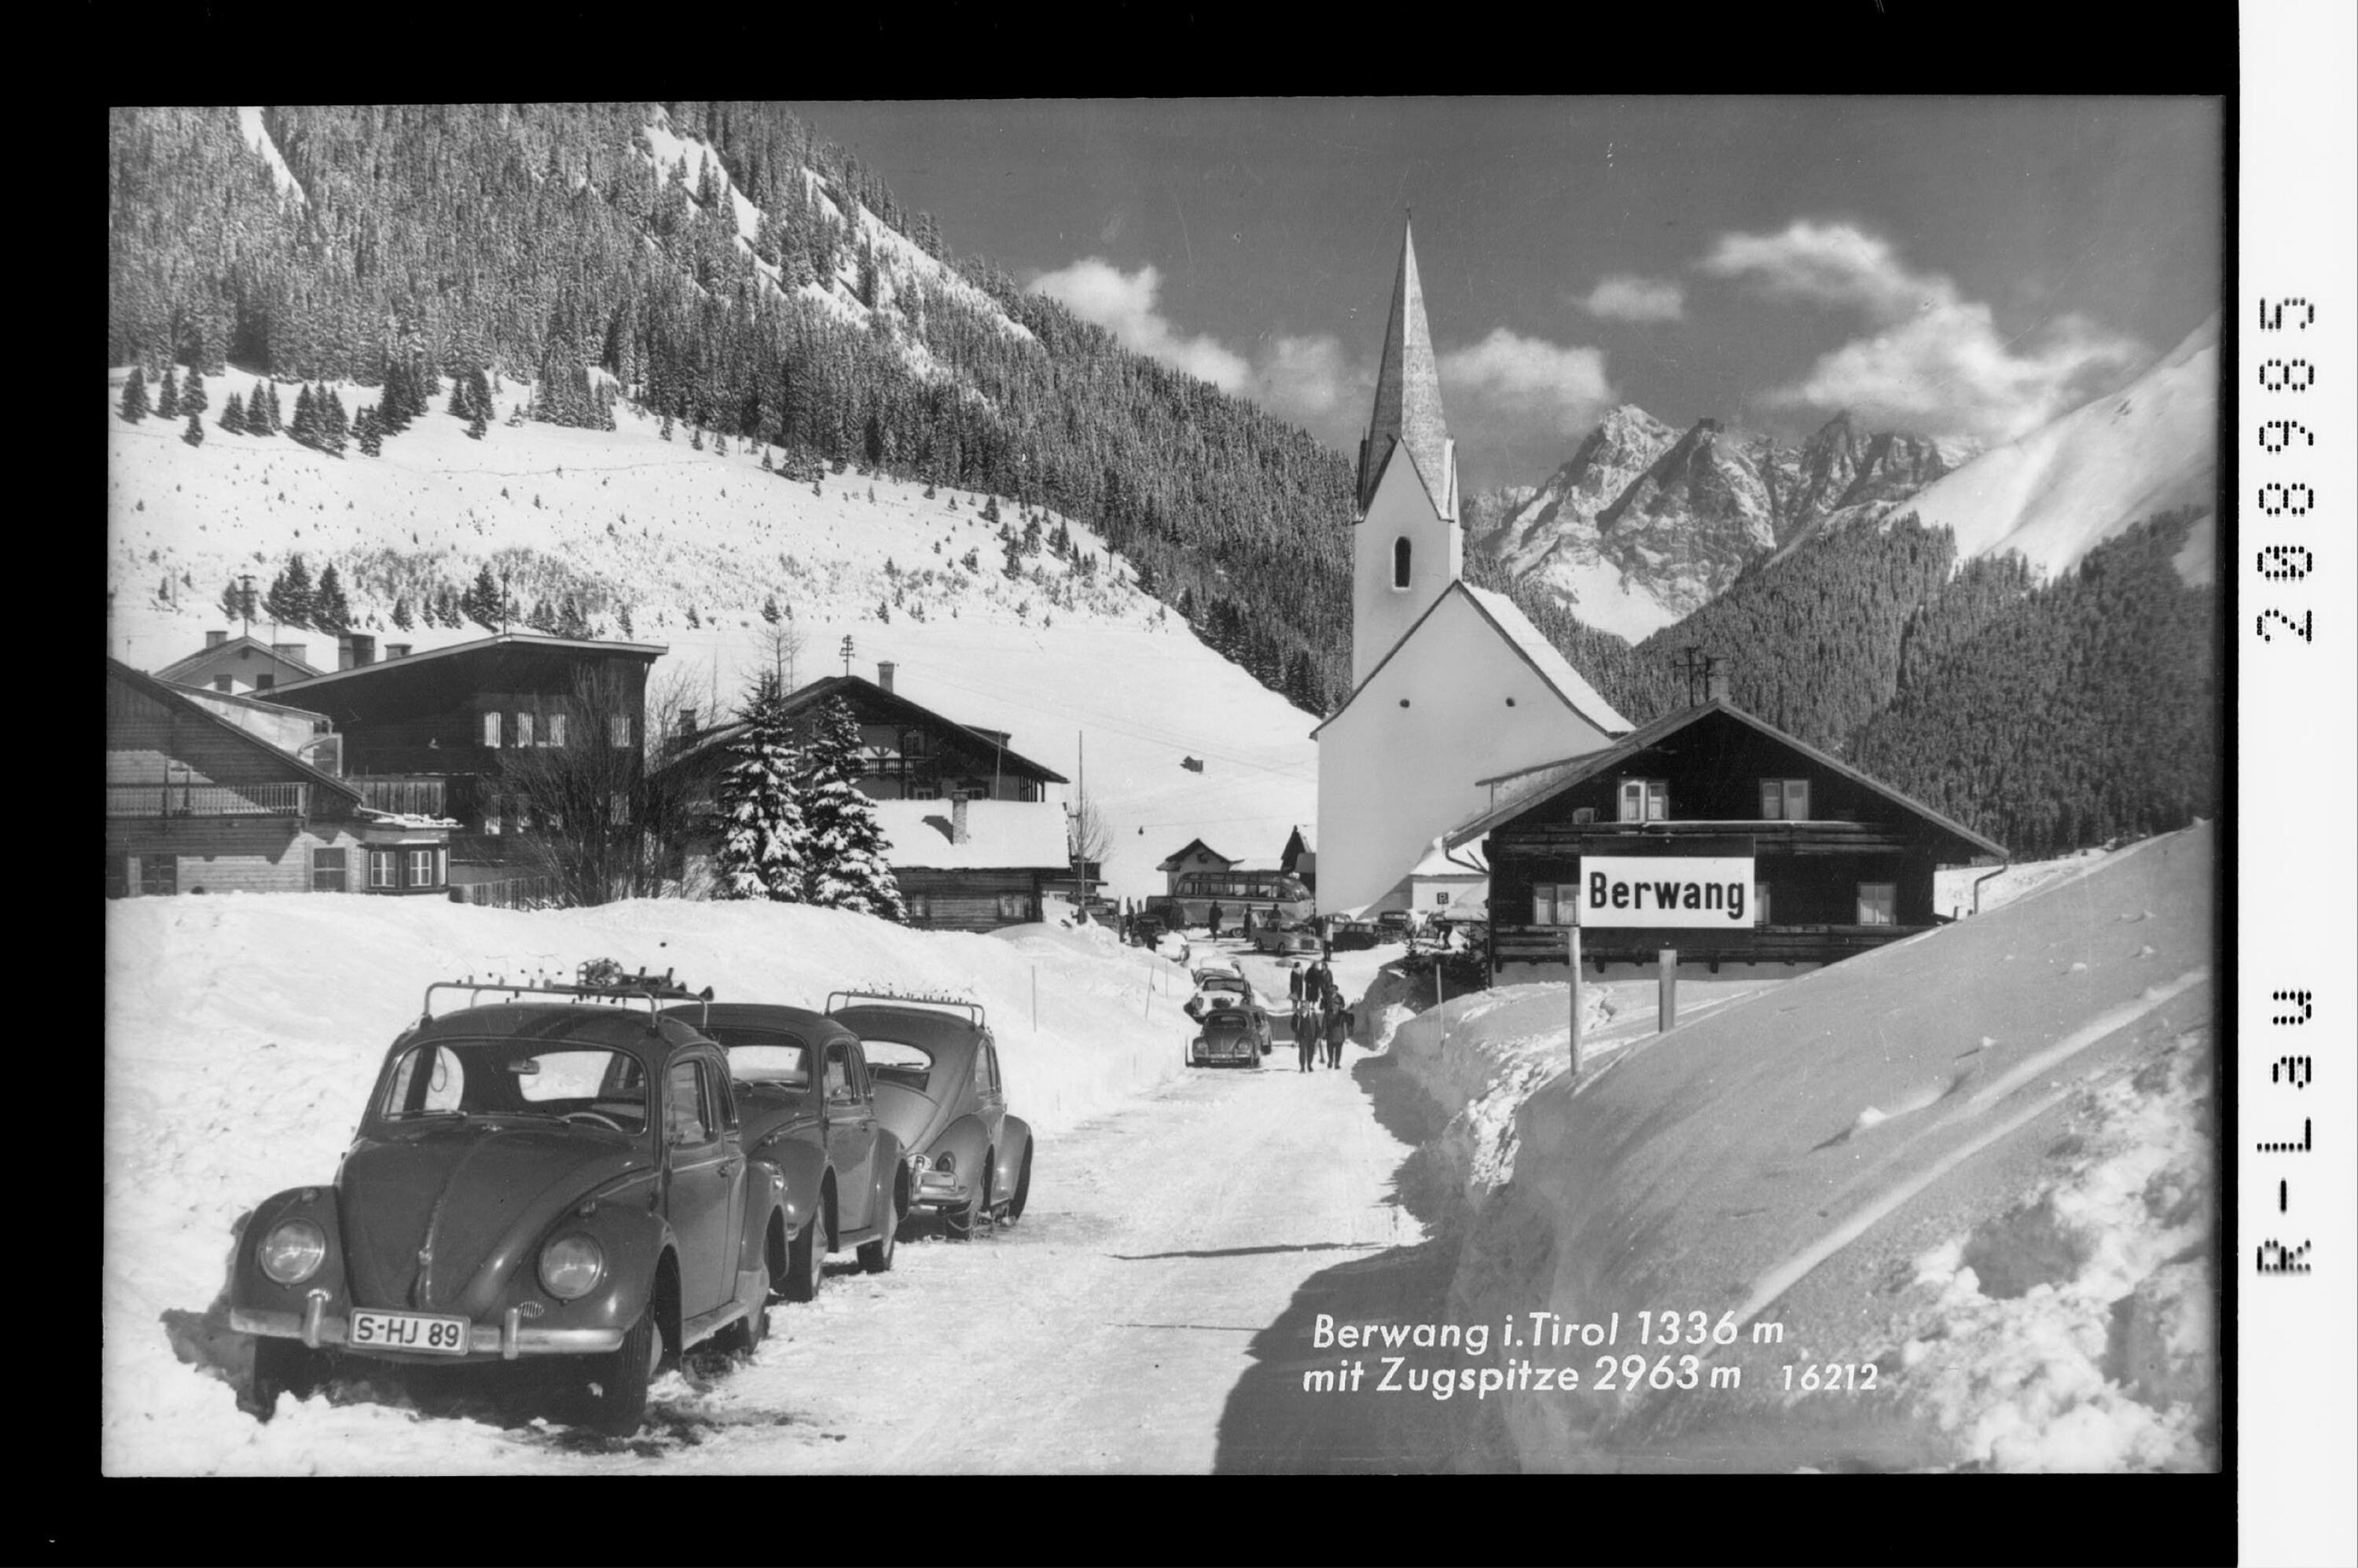 Berwang in Tirol 1336 m mit Zugspitze 2963 m></div>


    <hr>
    <div class=